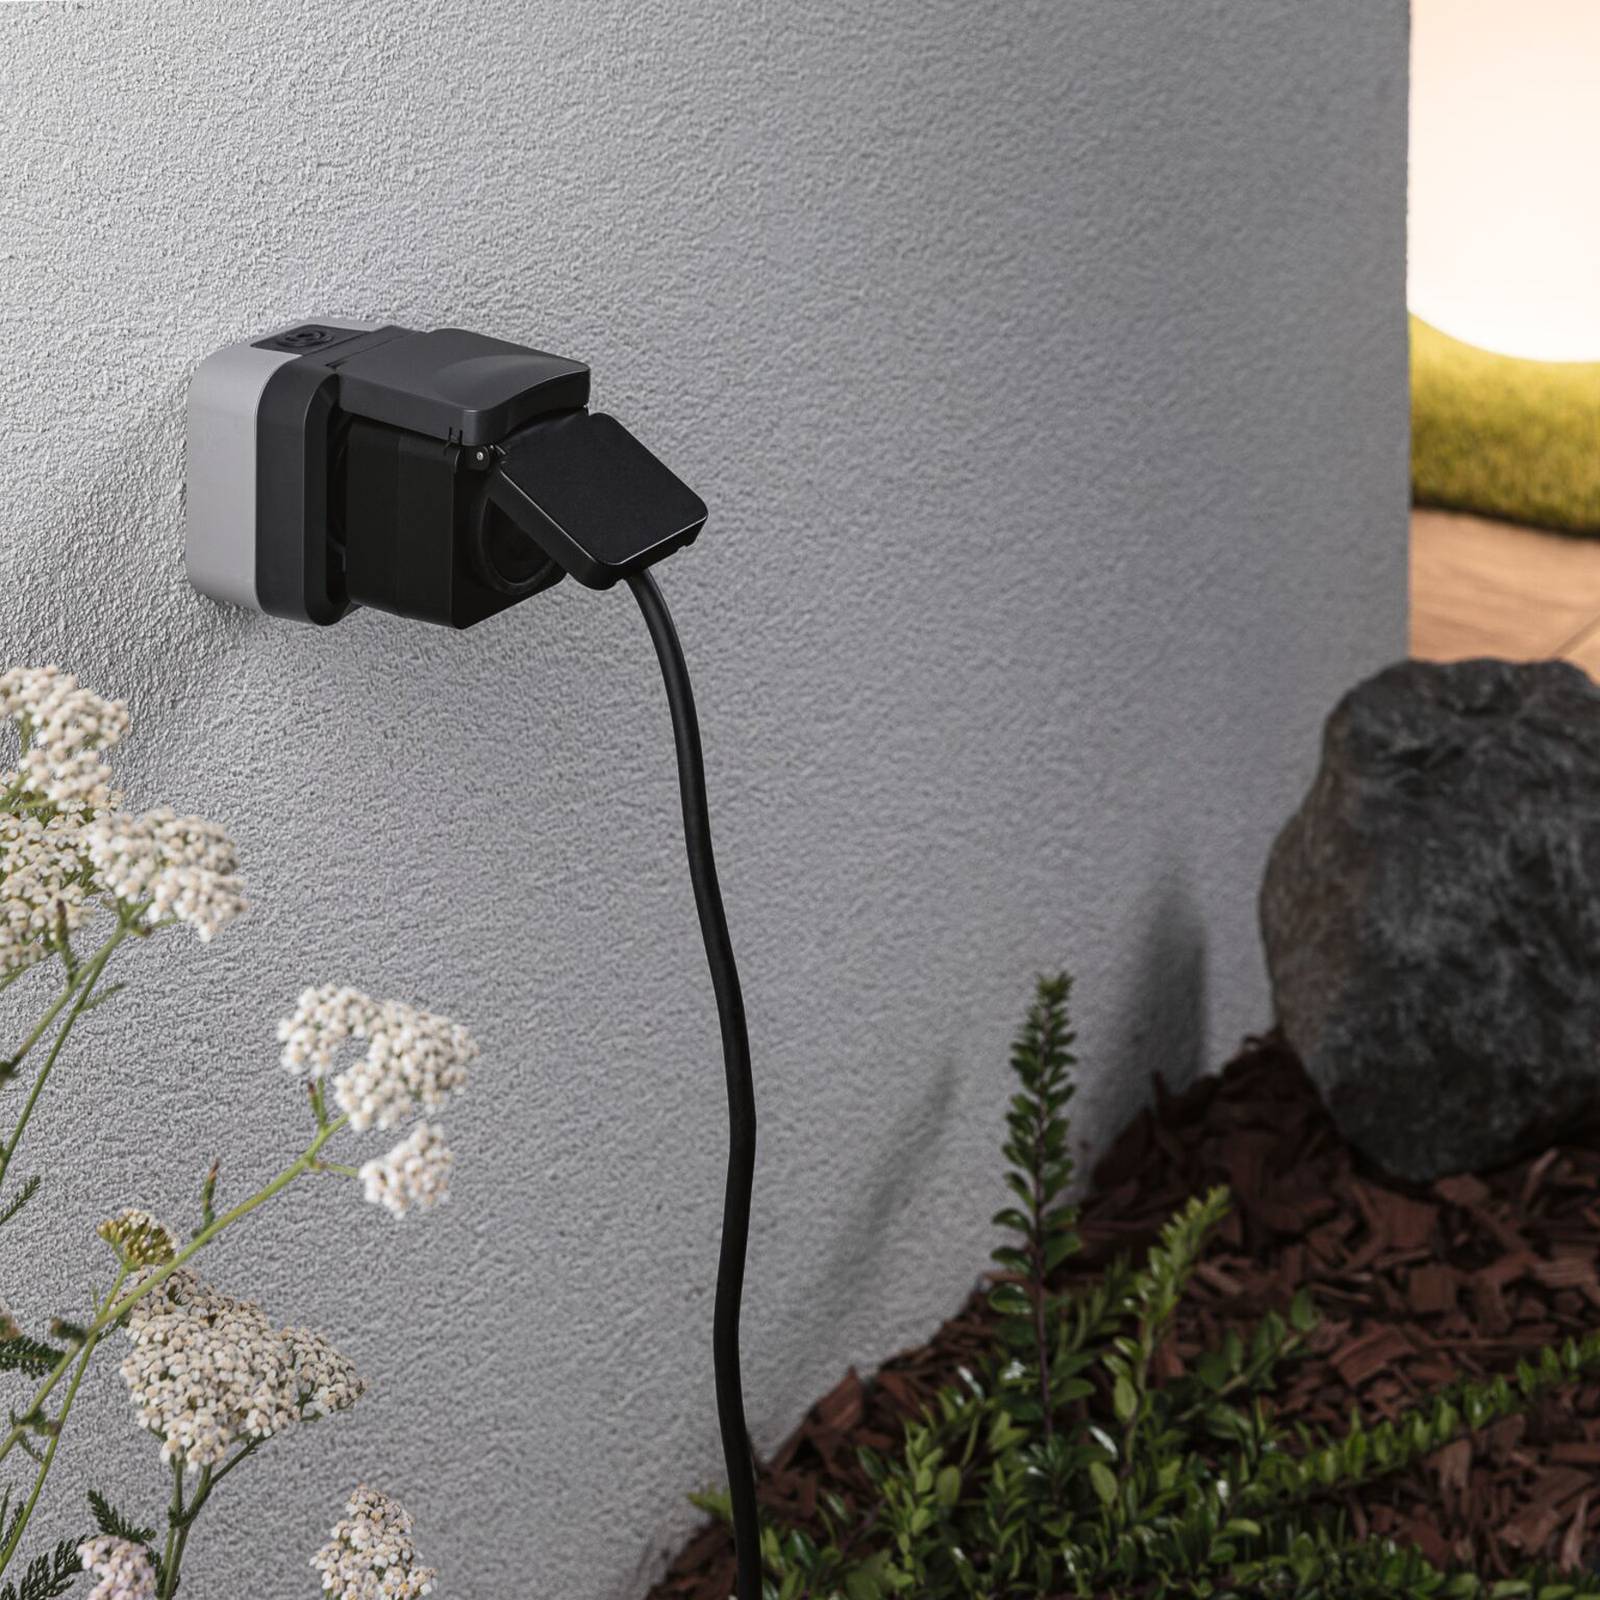 Paulmann Smart Plug Outdoor ZigBee adapterplugg for utendørs bruk